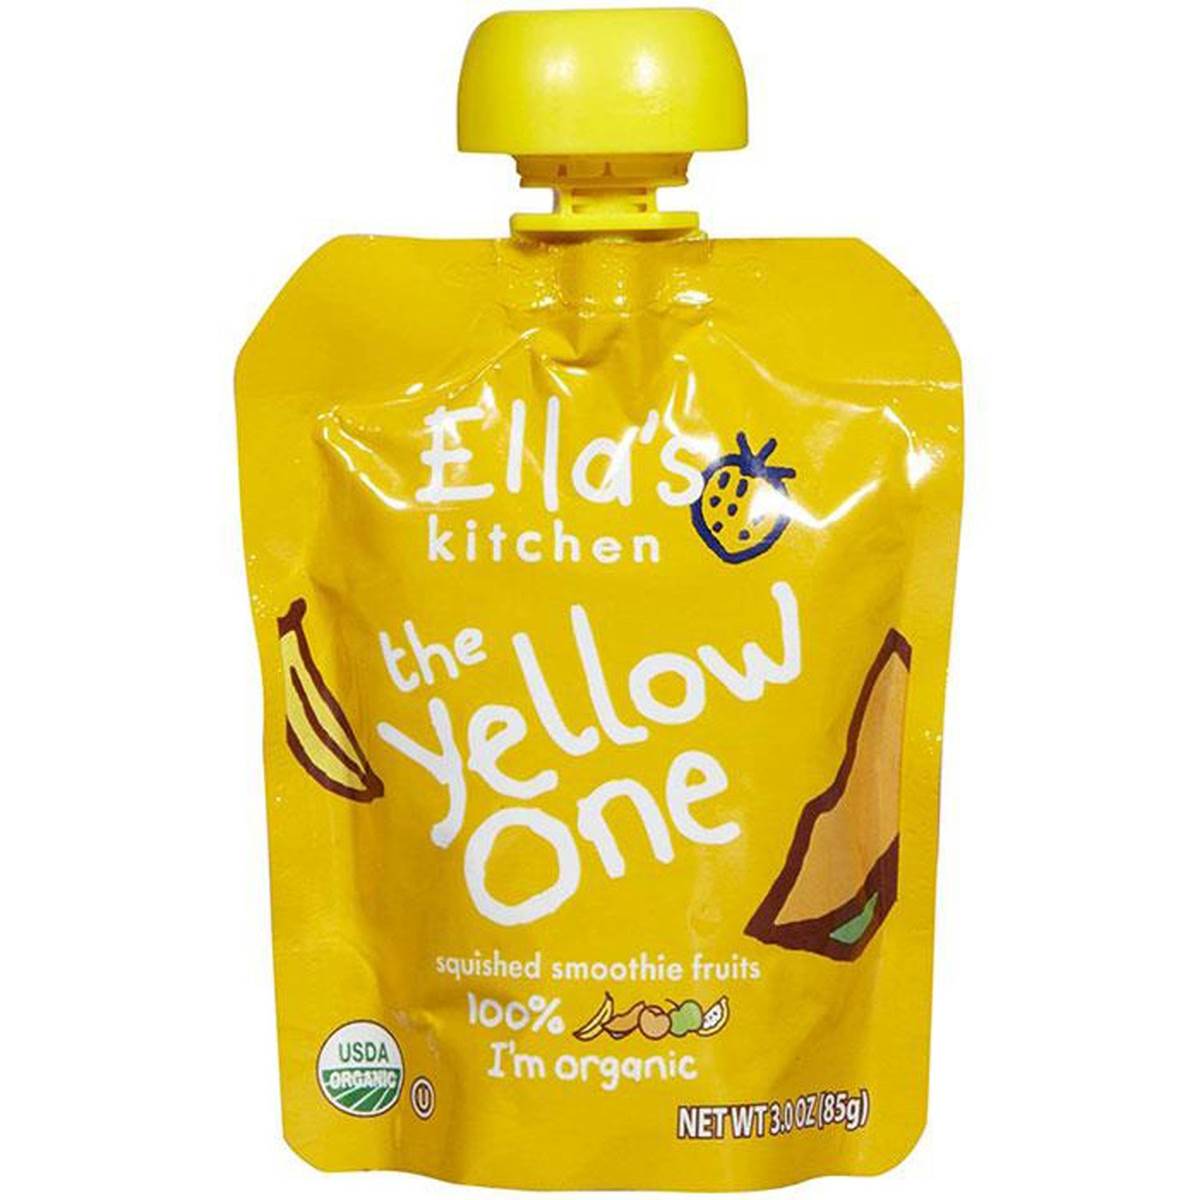 Ellas Kitchen The Yellow One - 90g